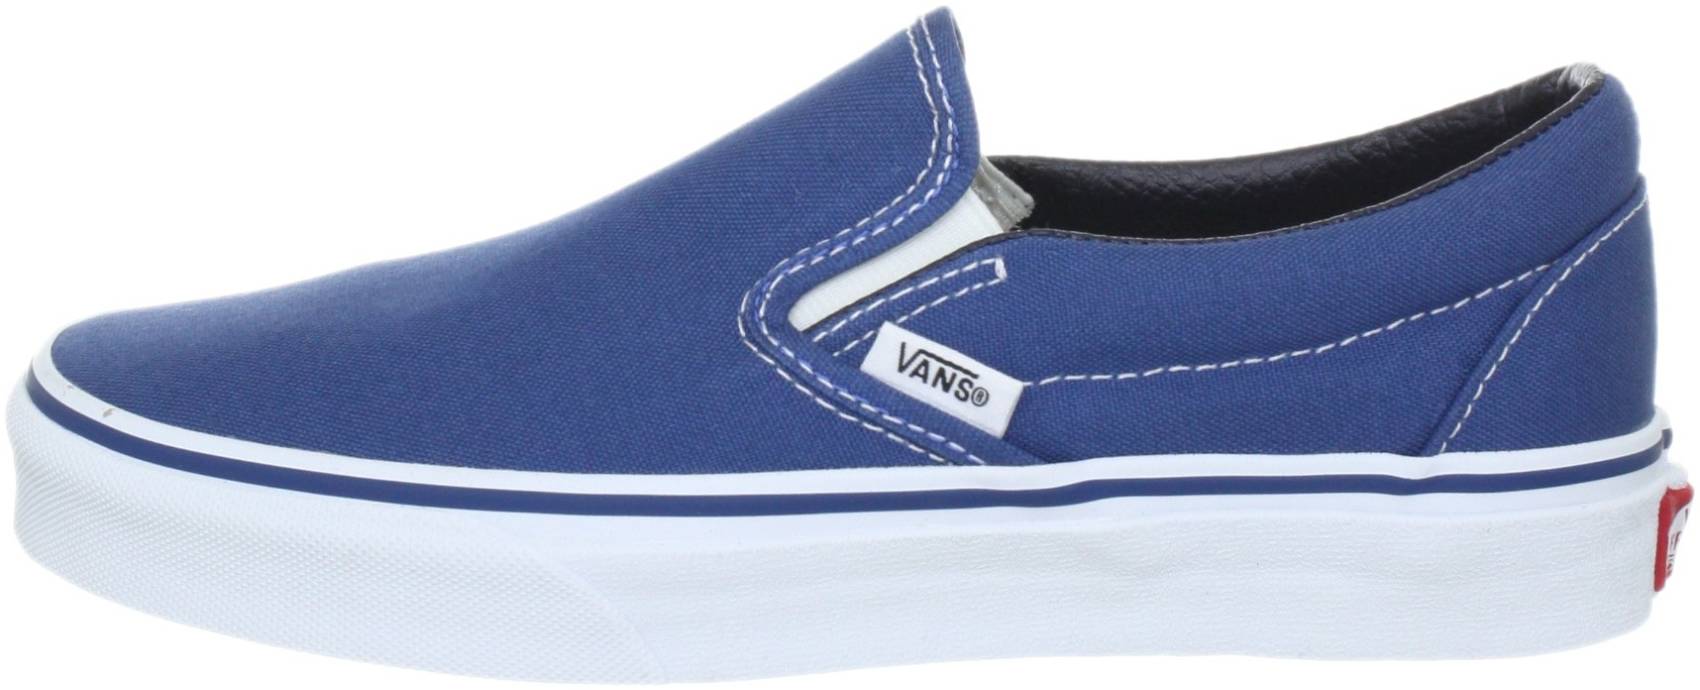 dark blue vans shoes for girls